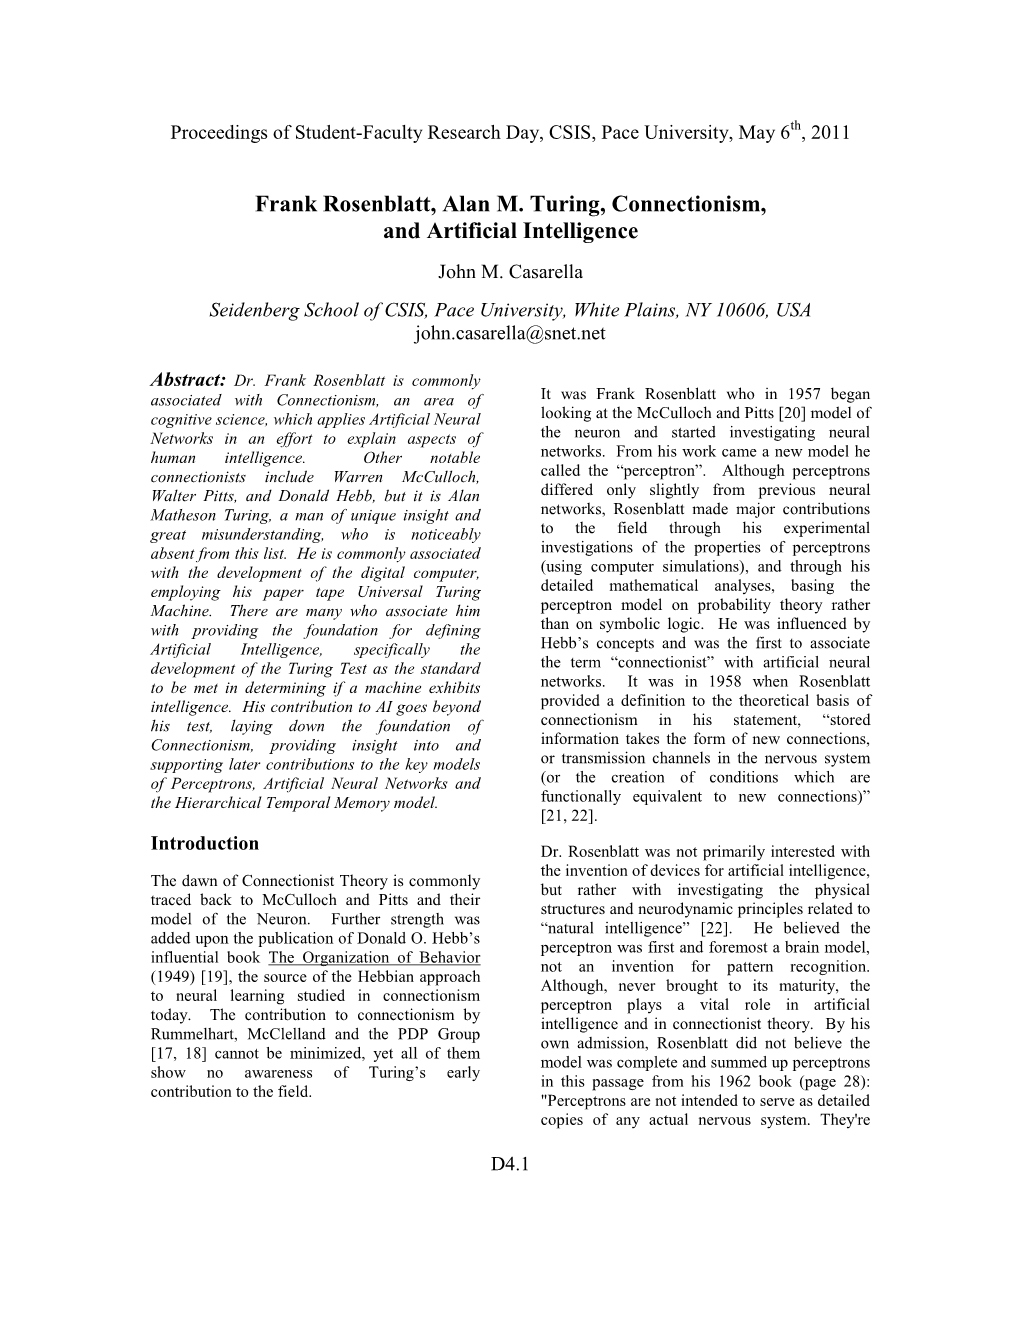 Frank Rosenblatt, Alan M. Turing, Connectionism, and Artificial Intelligence John M